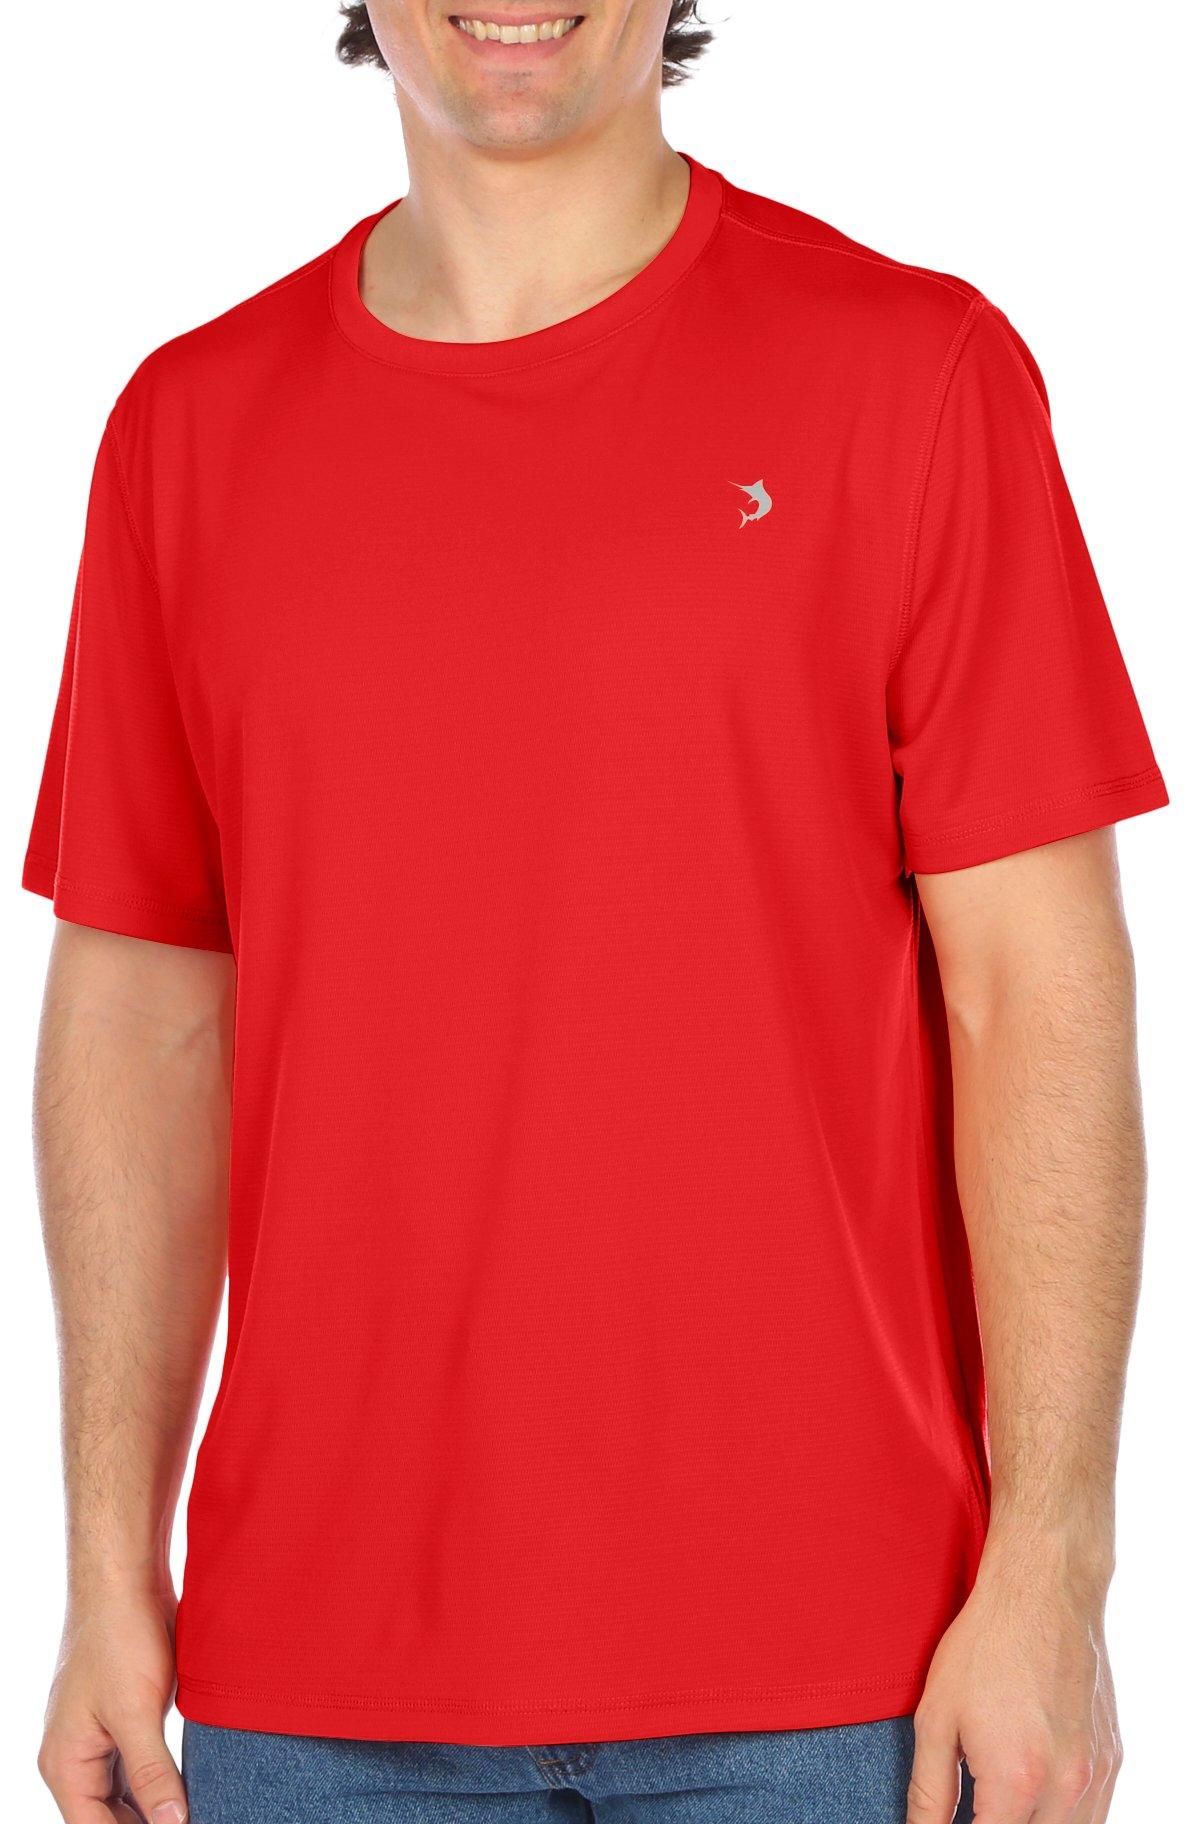 Reel Legends Mens Freeline Solid Short Sleeve T-Shirt - Size S - Beige -  New!